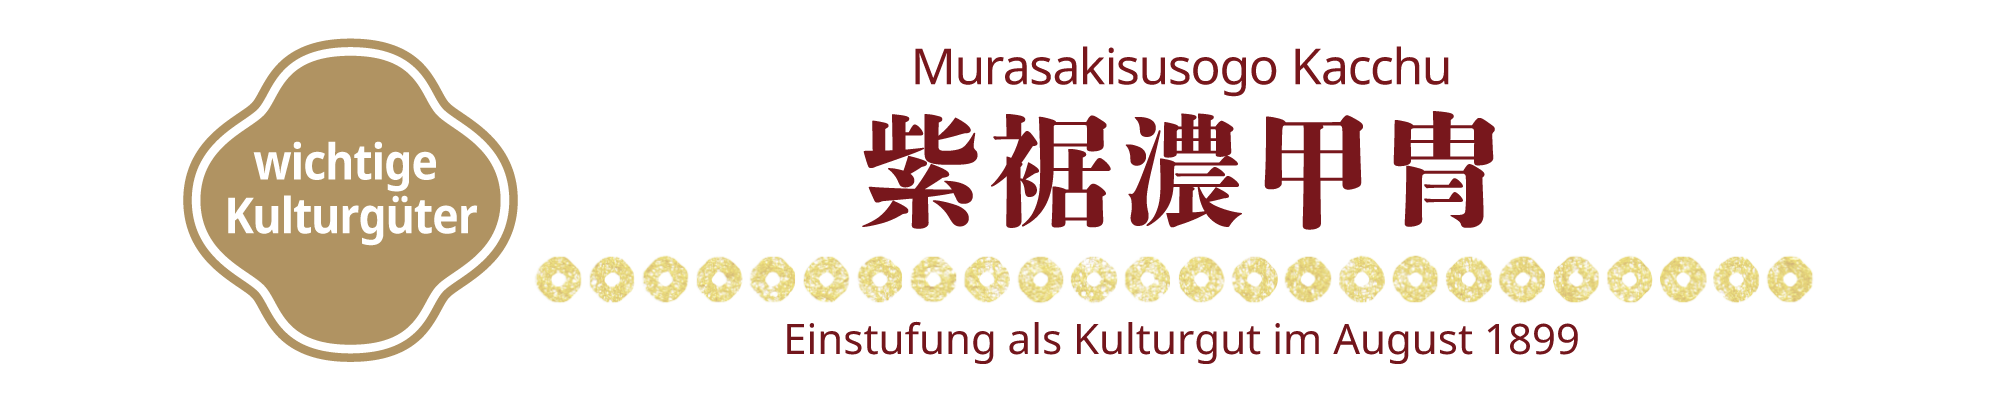 [wichtige Kulturgüter]Murasakisusogo Kacchu, Einstufung als Kulturgut im August 1899